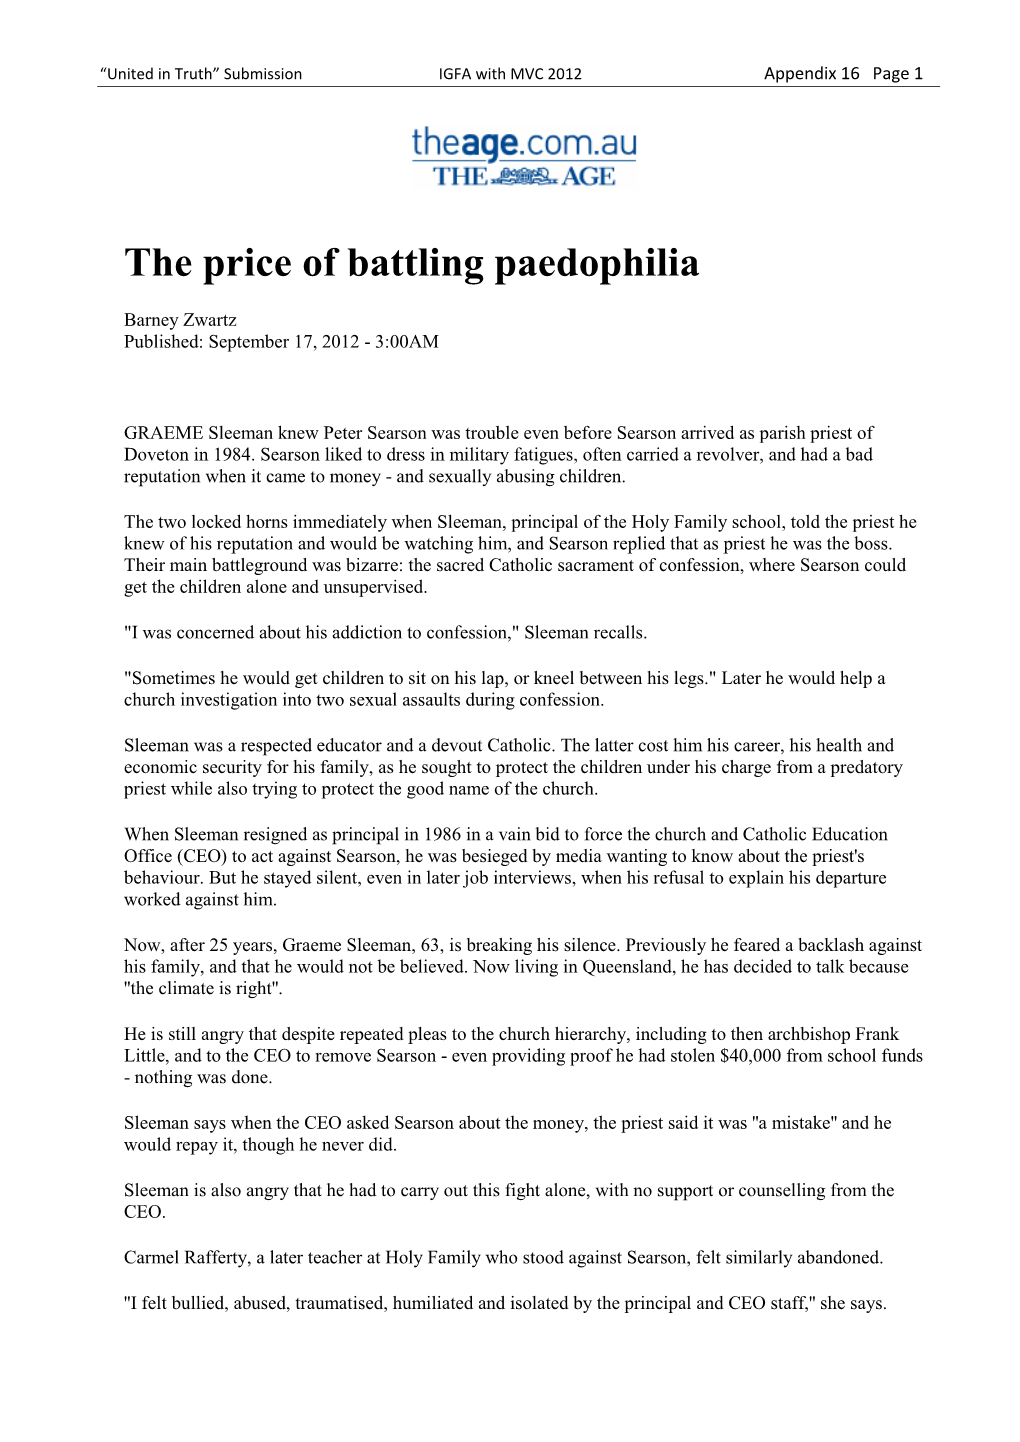 The Price of Battling Paedophilia